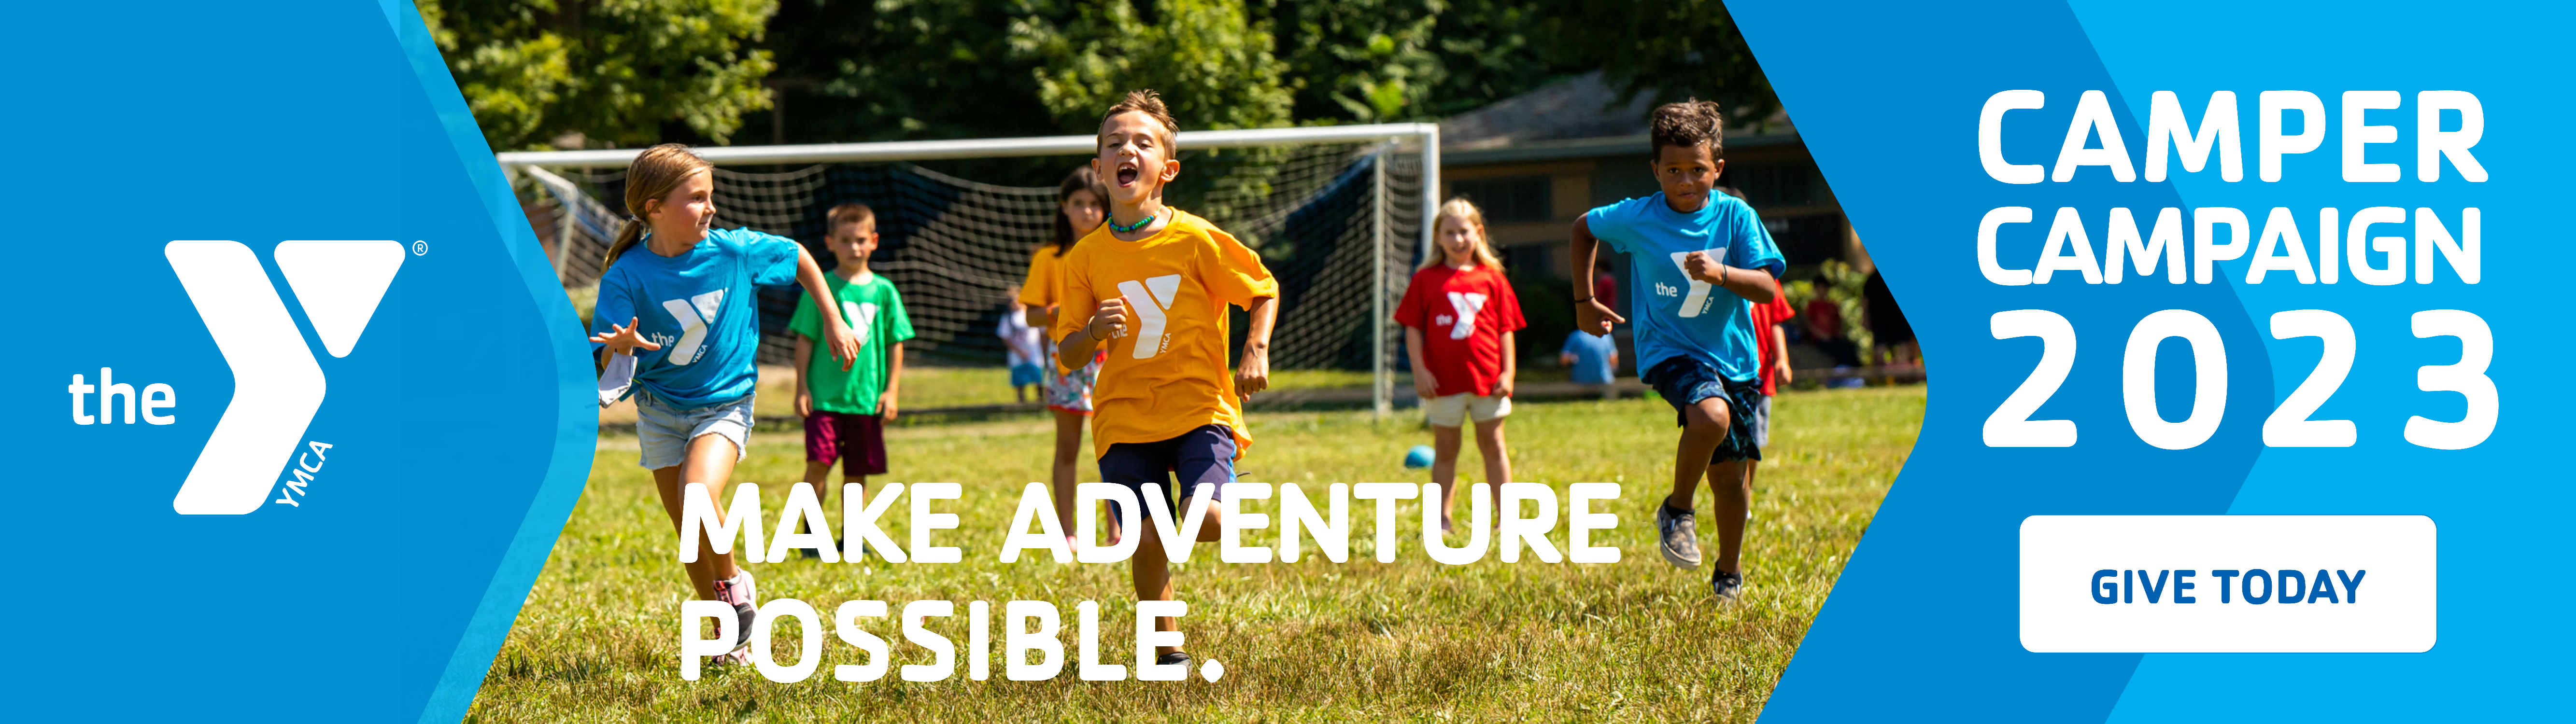 Make Adventure Possible.